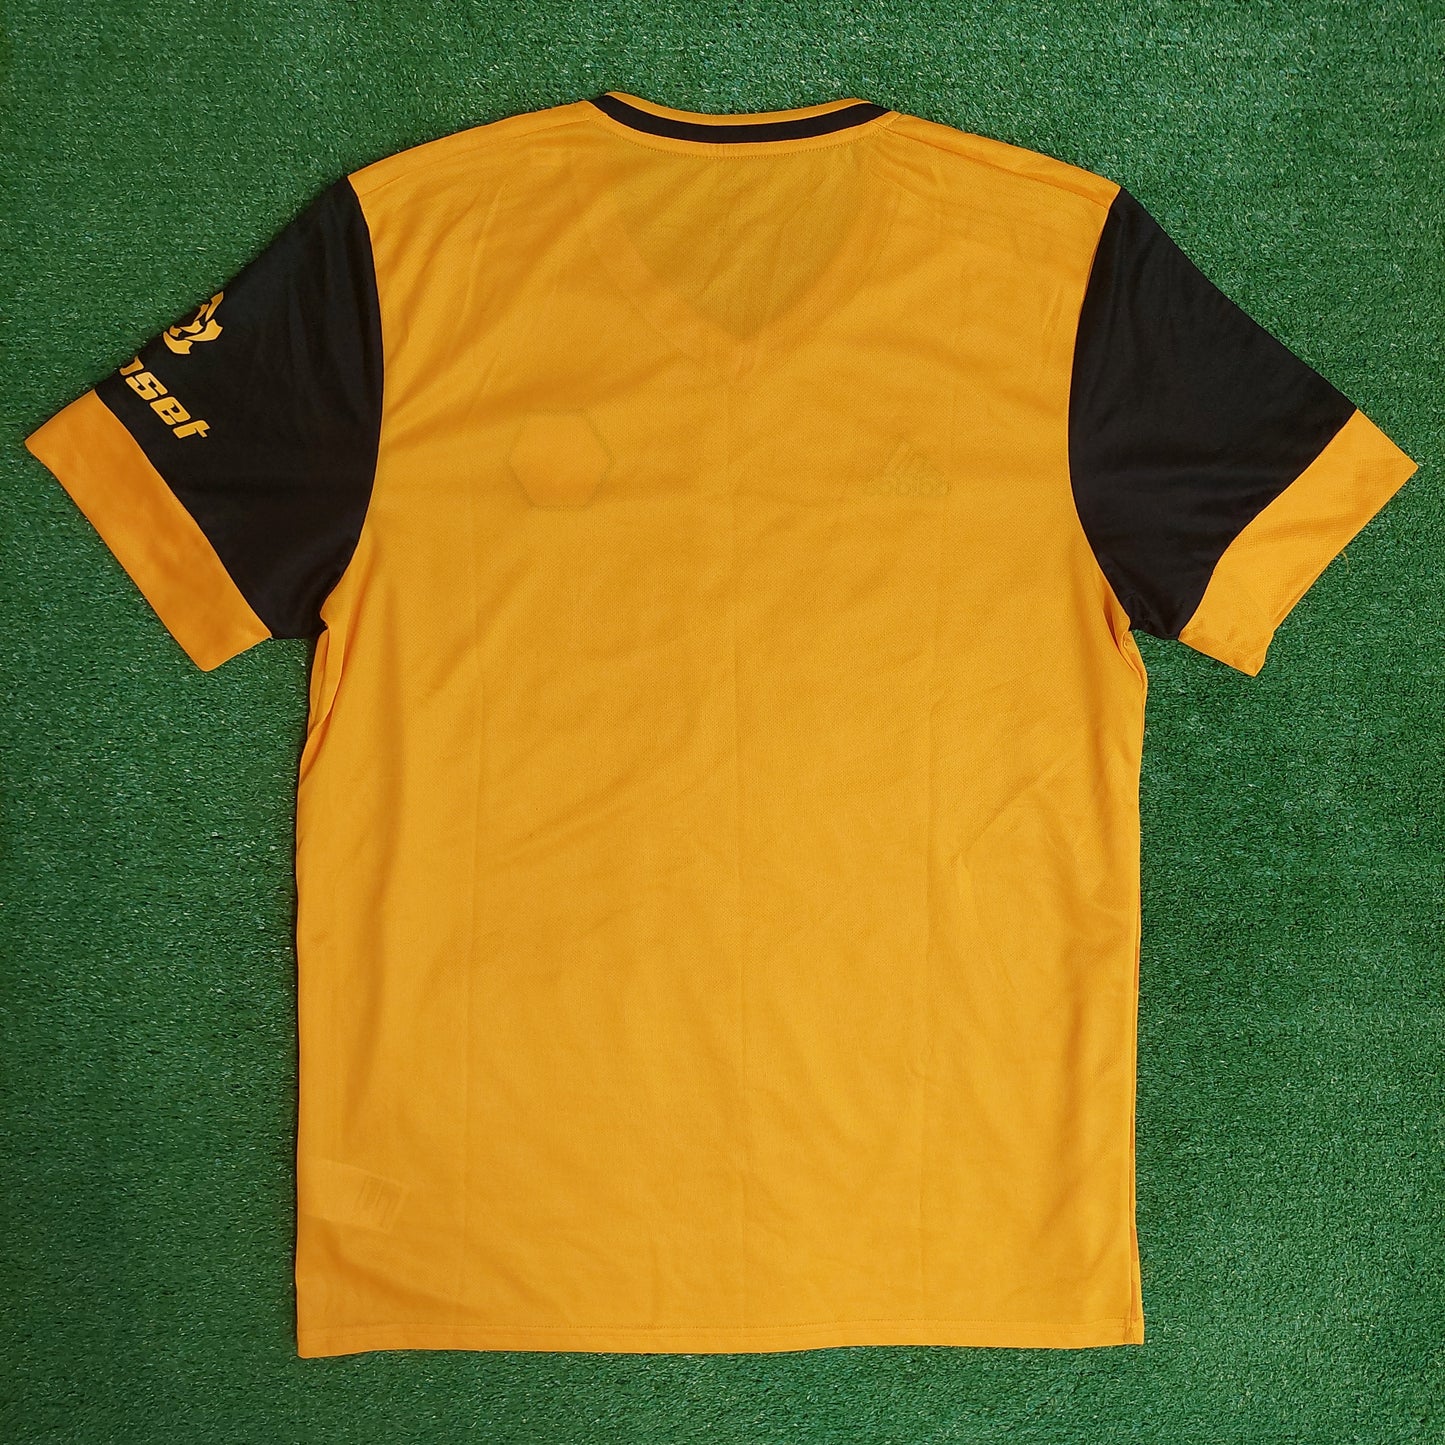 Wolverhampton Wanderers 2020/21 Home Shirt (Excellent) - Size L